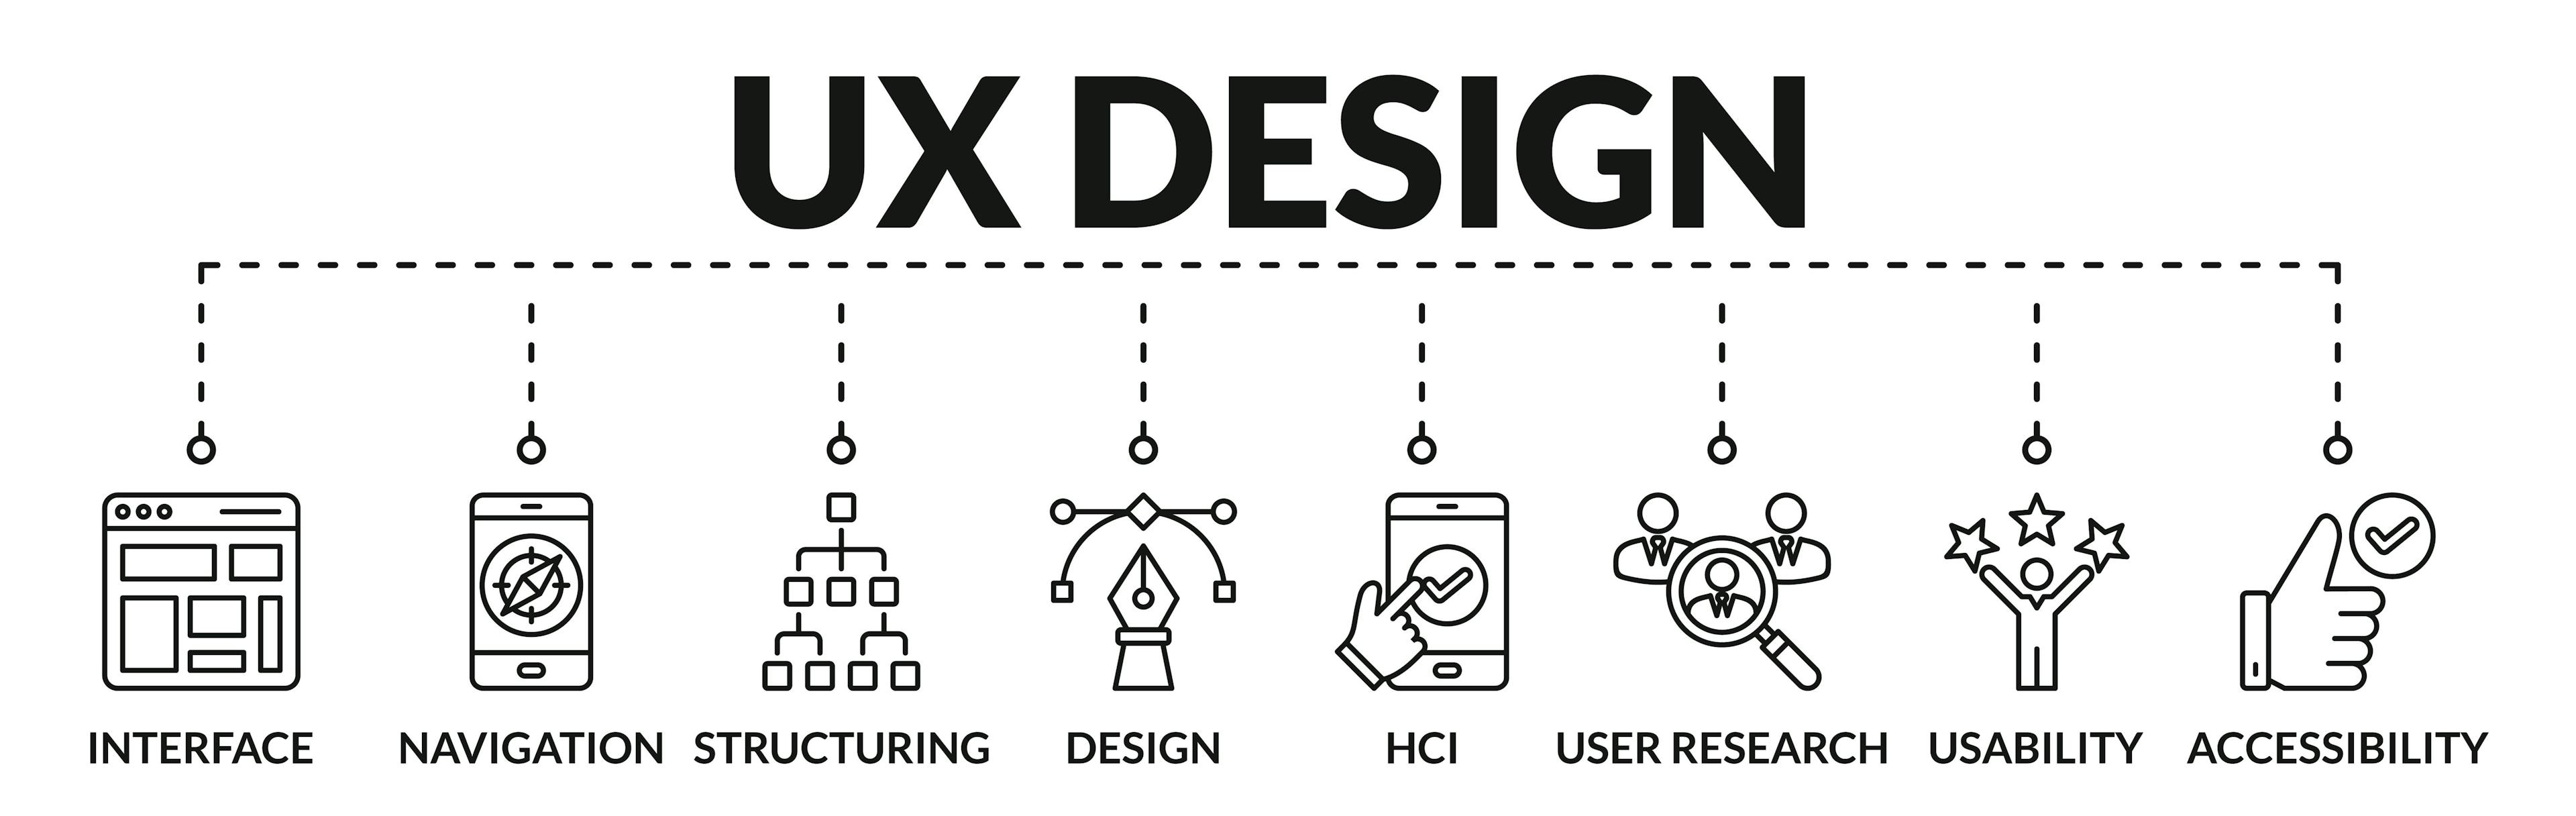 image depicting the workings behind UX design